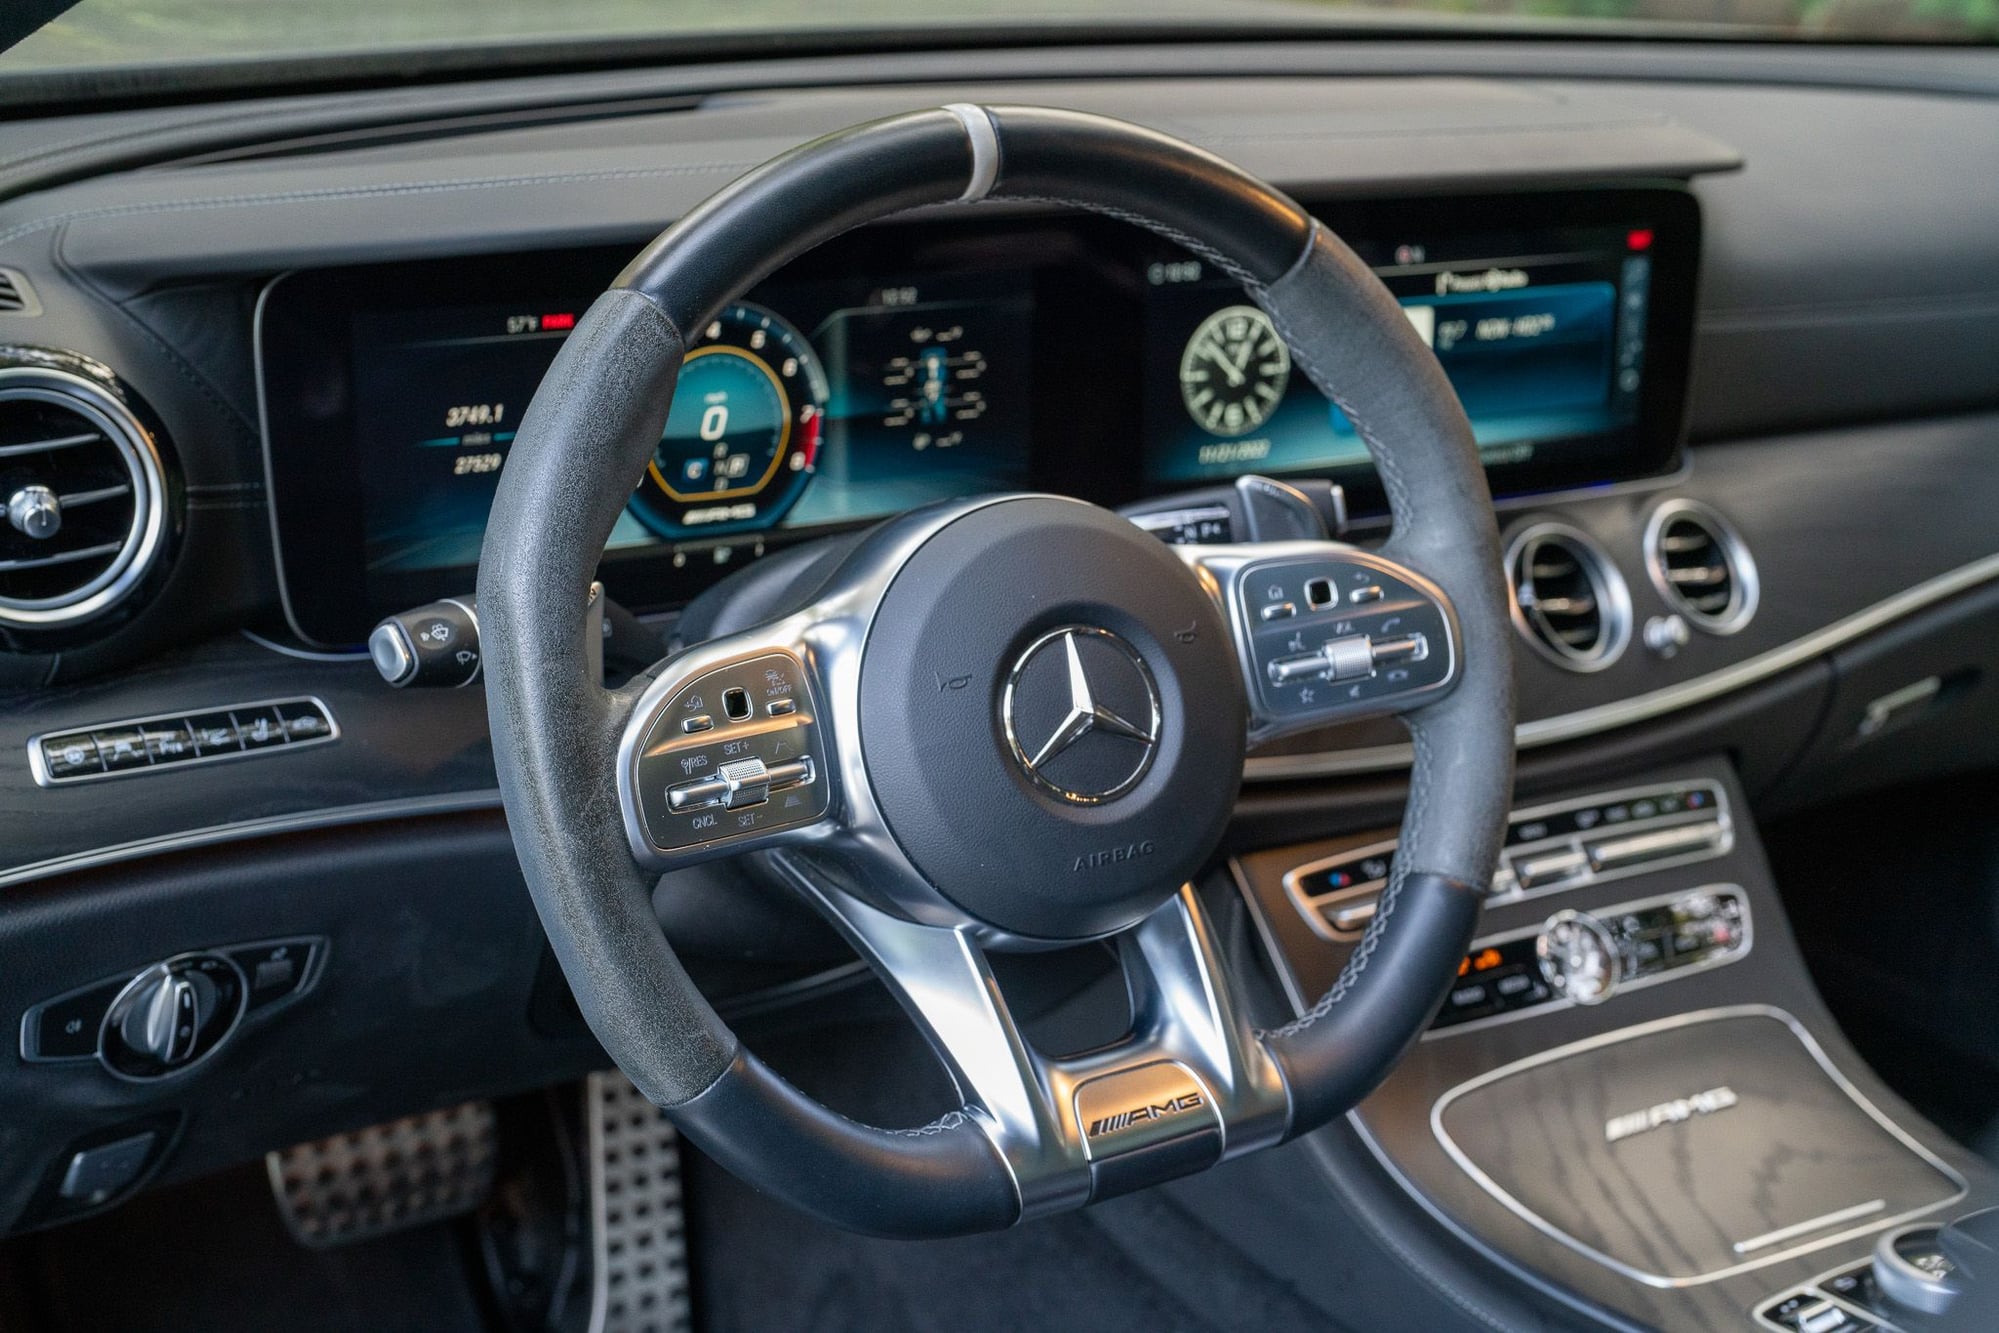 2019 Mercedes-Benz E63 AMG S - 2019 Selenite Grey E63S Wagon with Carbon Ceramic Brakes and... - Used - VIN wddzh8kb2ka515386 - 27,500 Miles - Wagon - Gray - Burlingame, CA 94010, United States